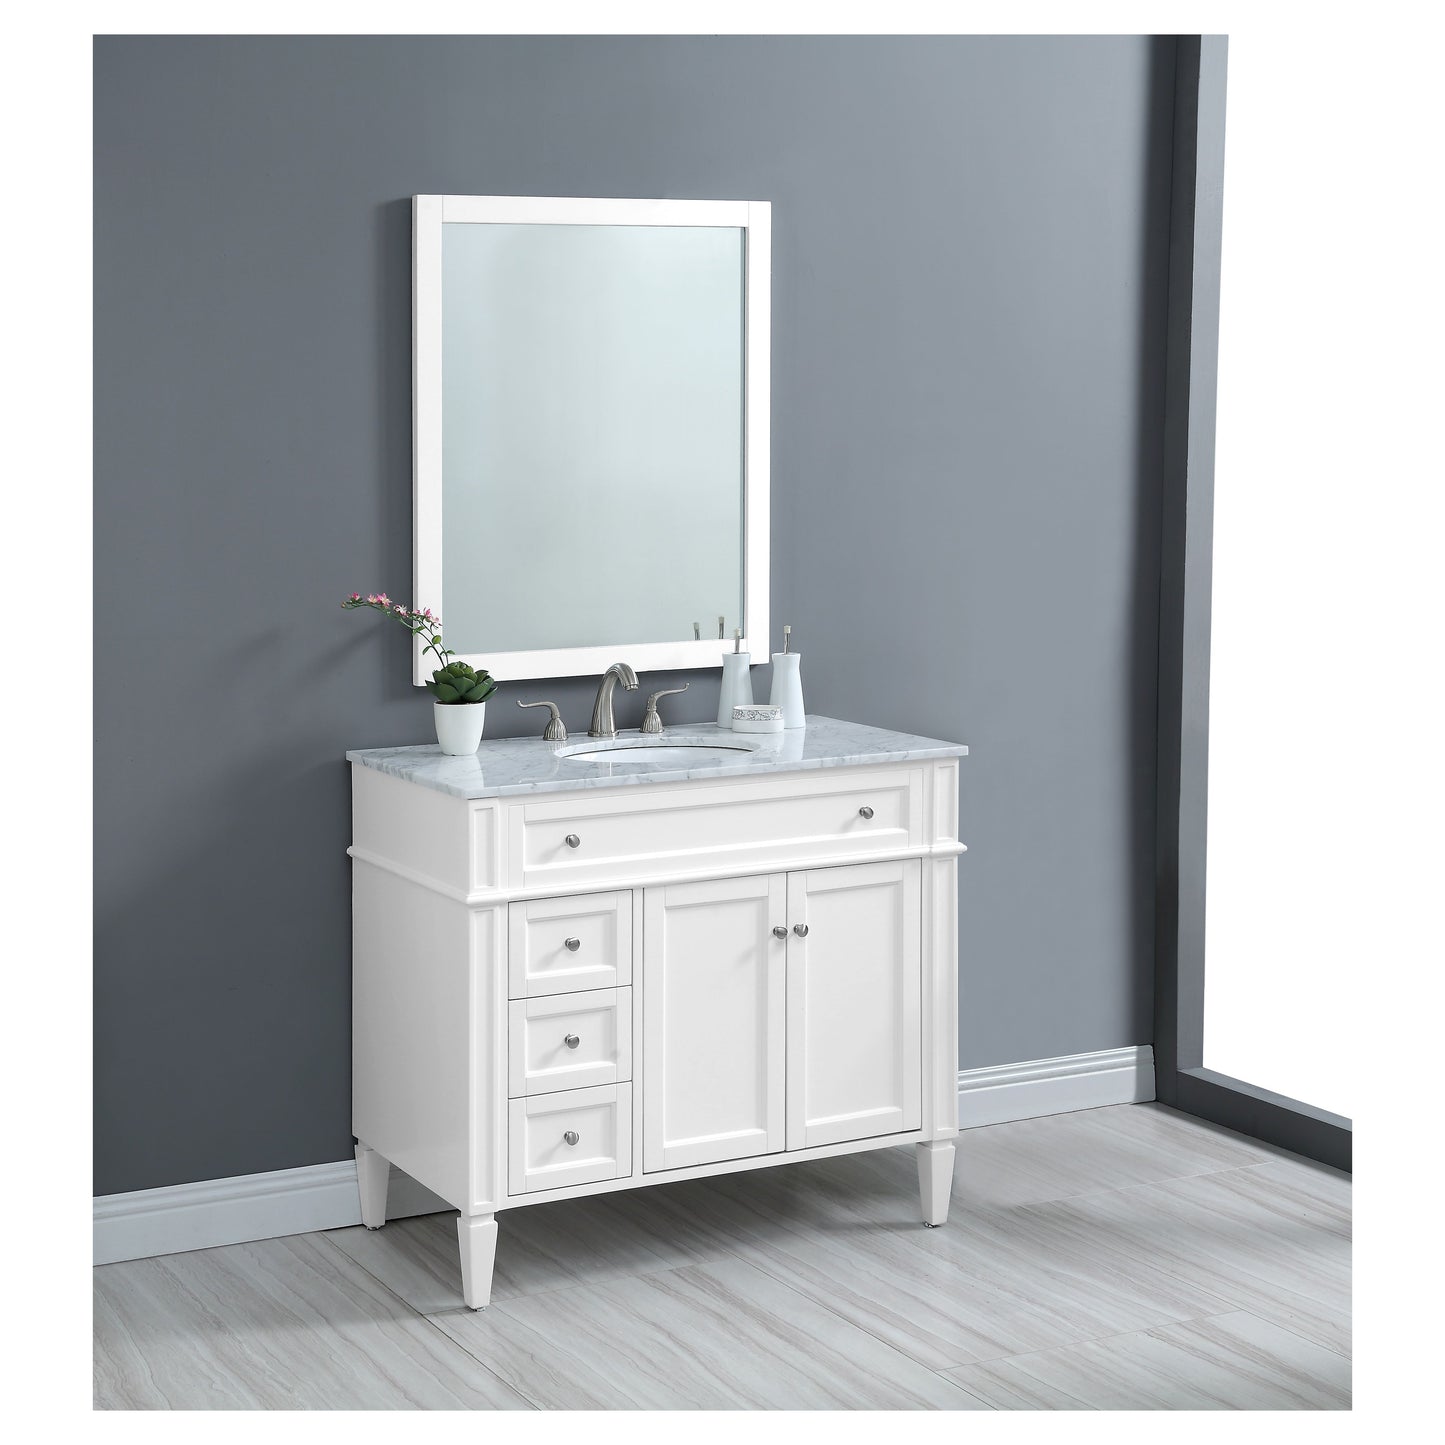 VF12540WH 40" Single Bathroom Vanity Set in White